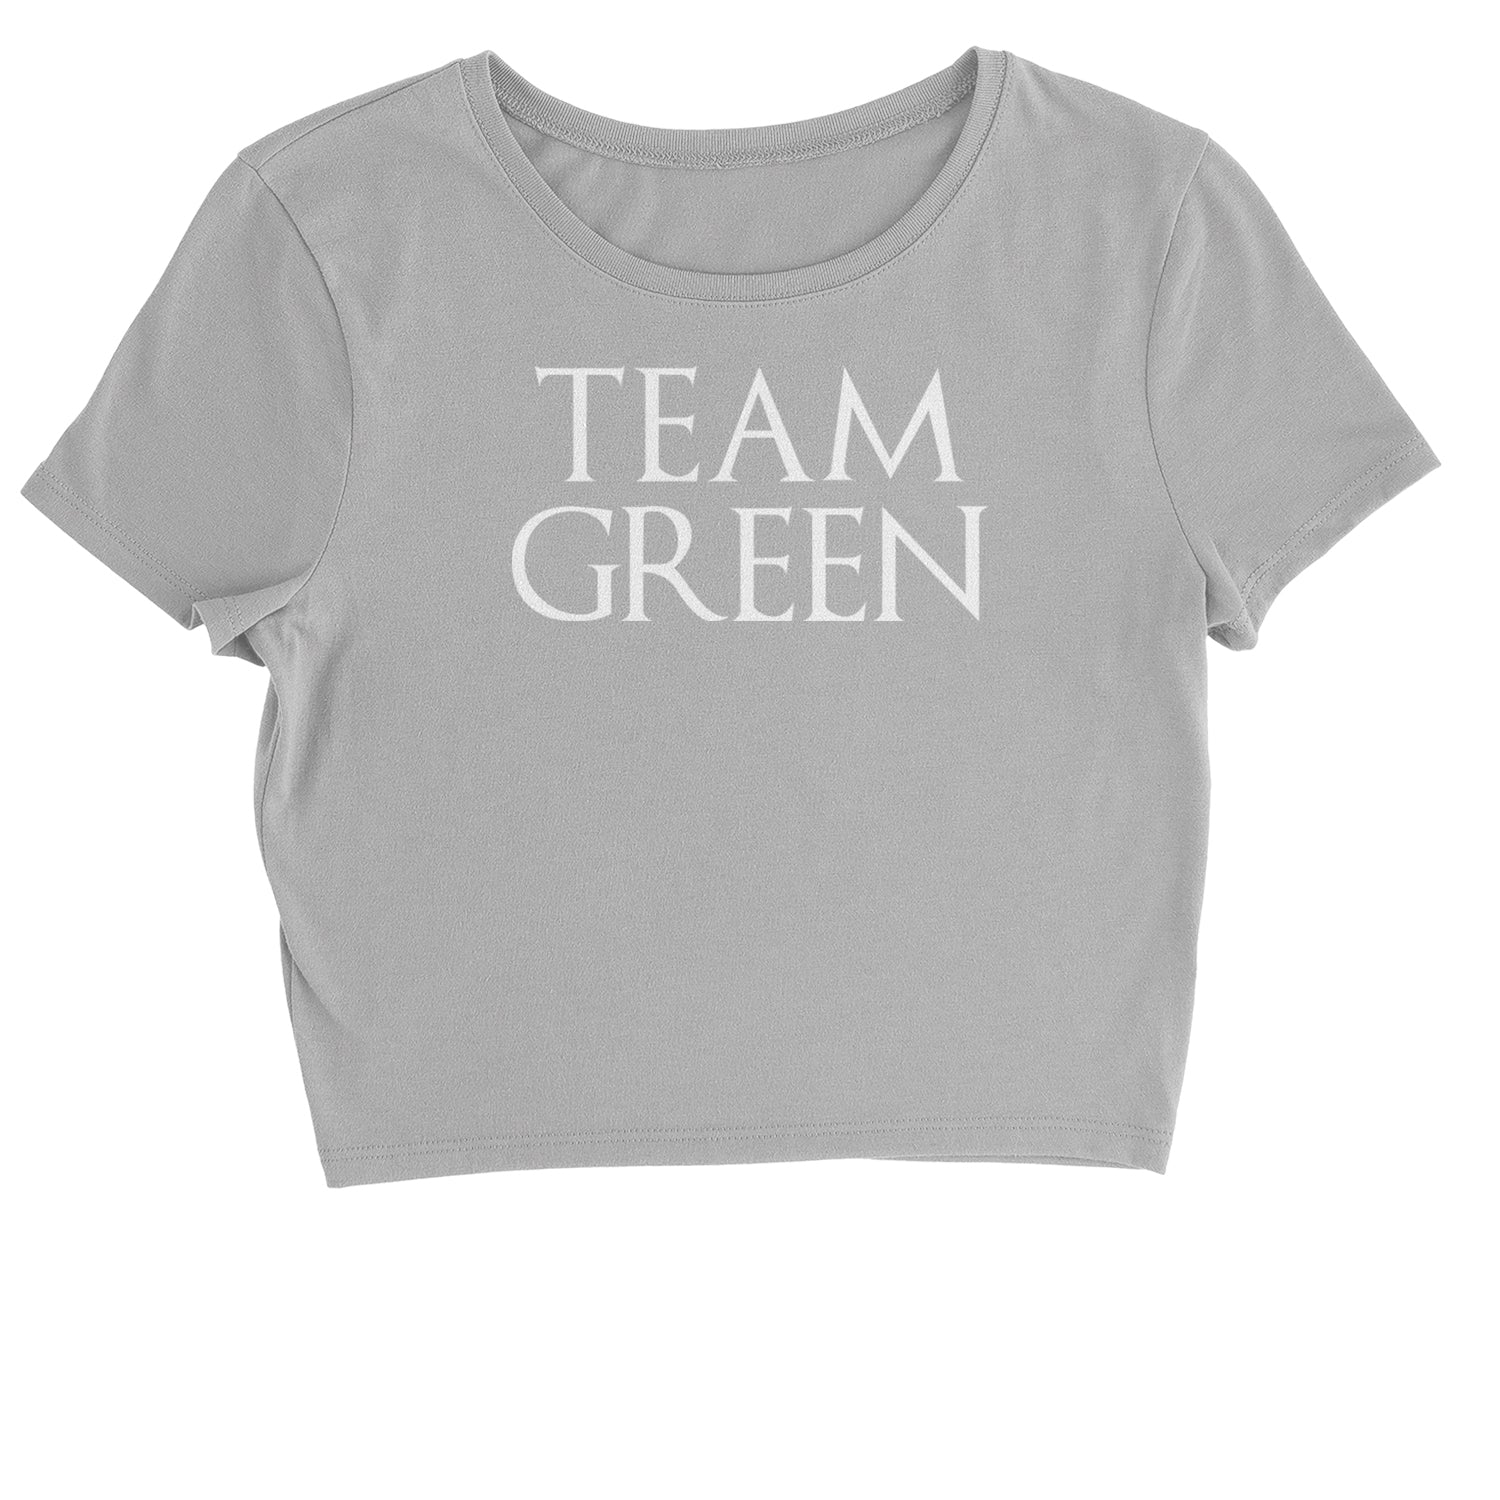 Team Green HotD Cropped T-Shirt alicent, hightower, rhaneyra, targaryen by Expression Tees